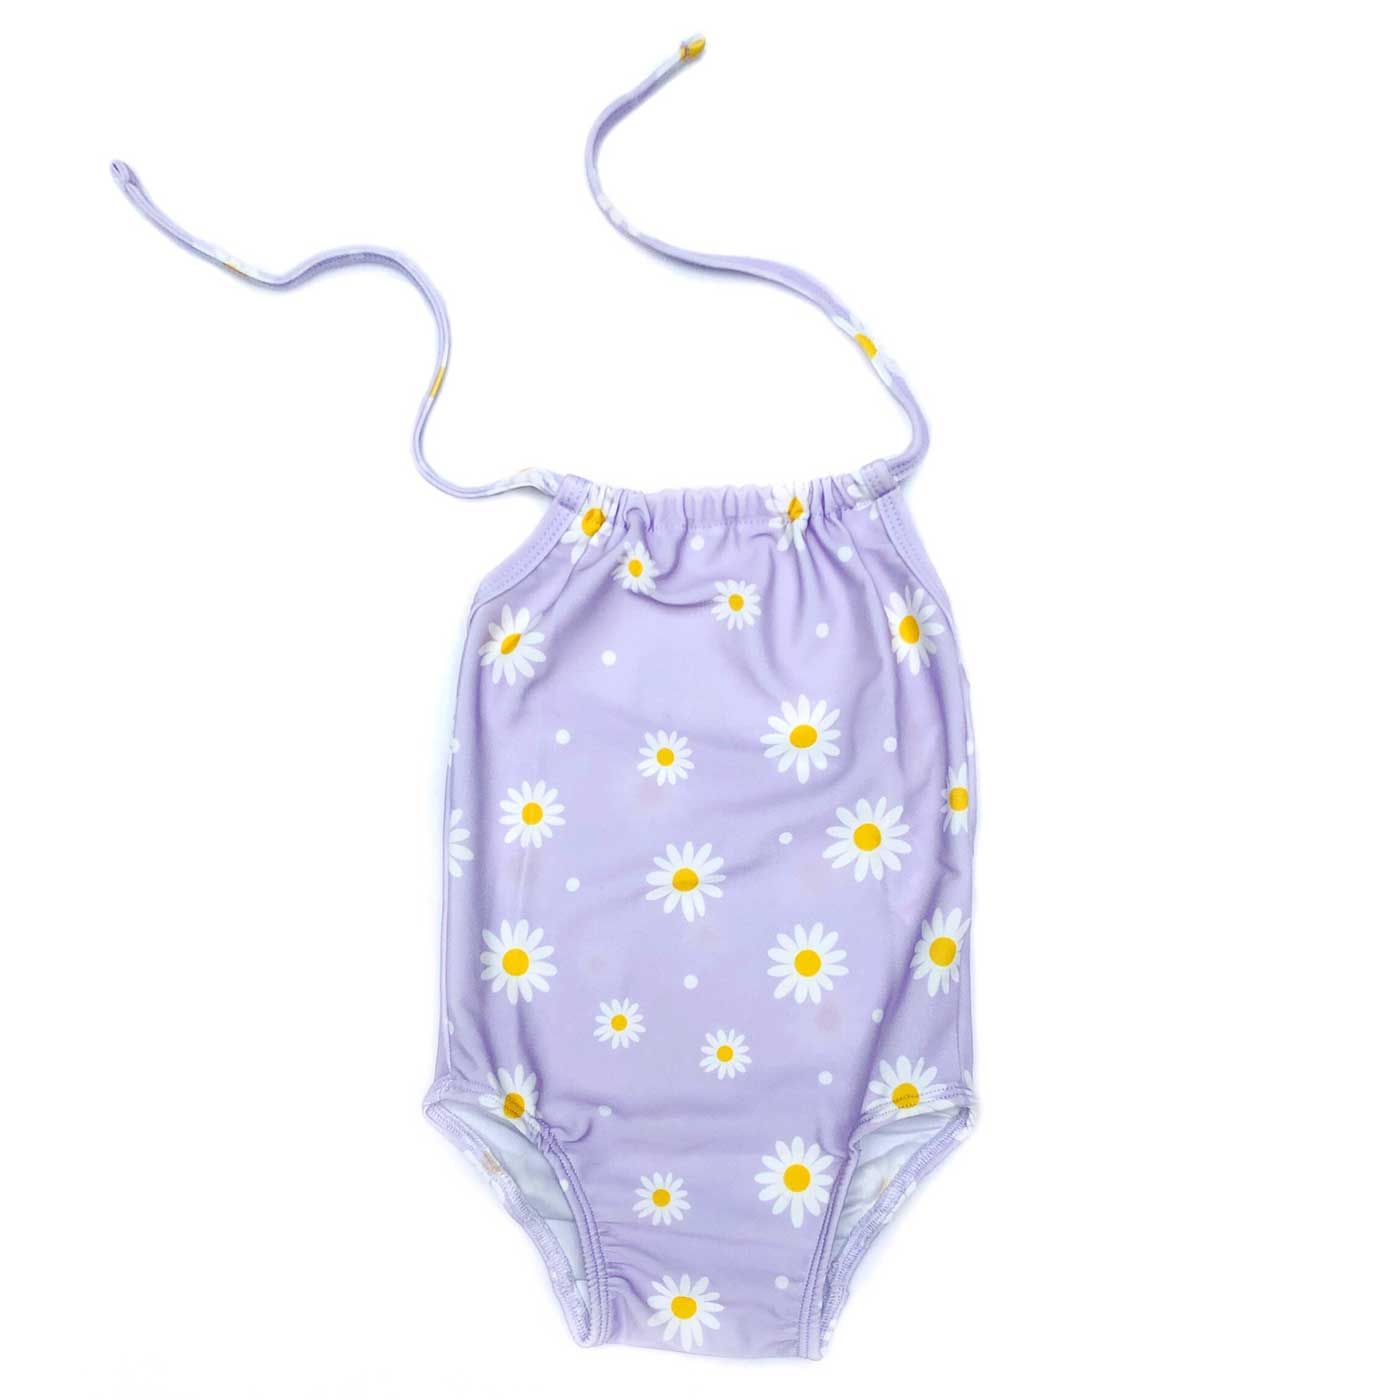 Little Whimsea Daisy Swimsuit in Lilac - S - 1